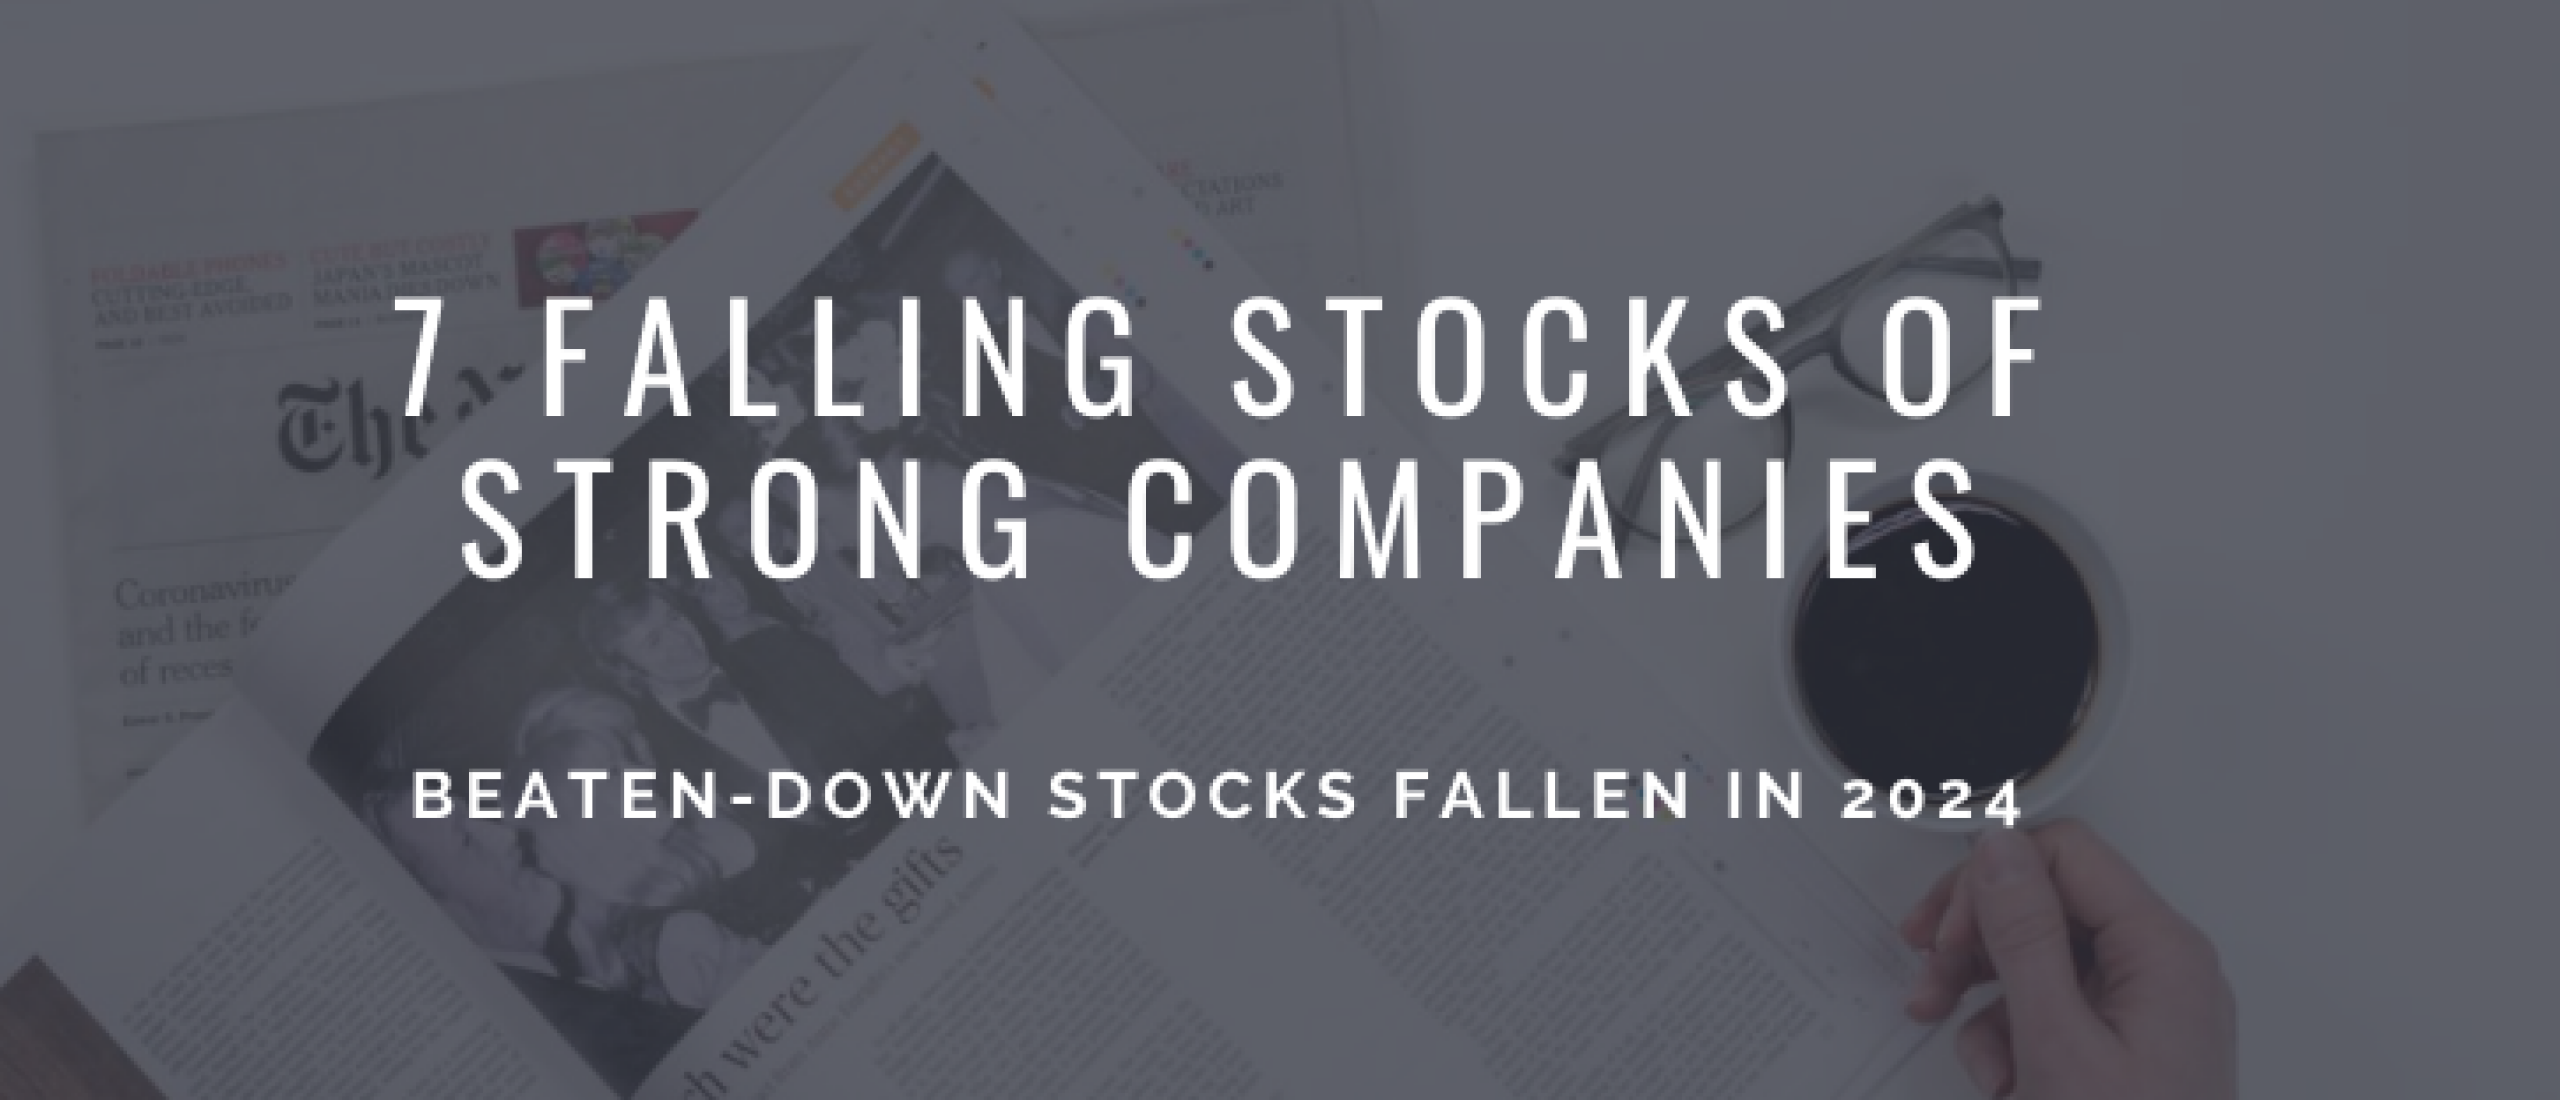 7 Falling Stocks of Strong Companies: Beaten-Down Stocks Fallen in 2024